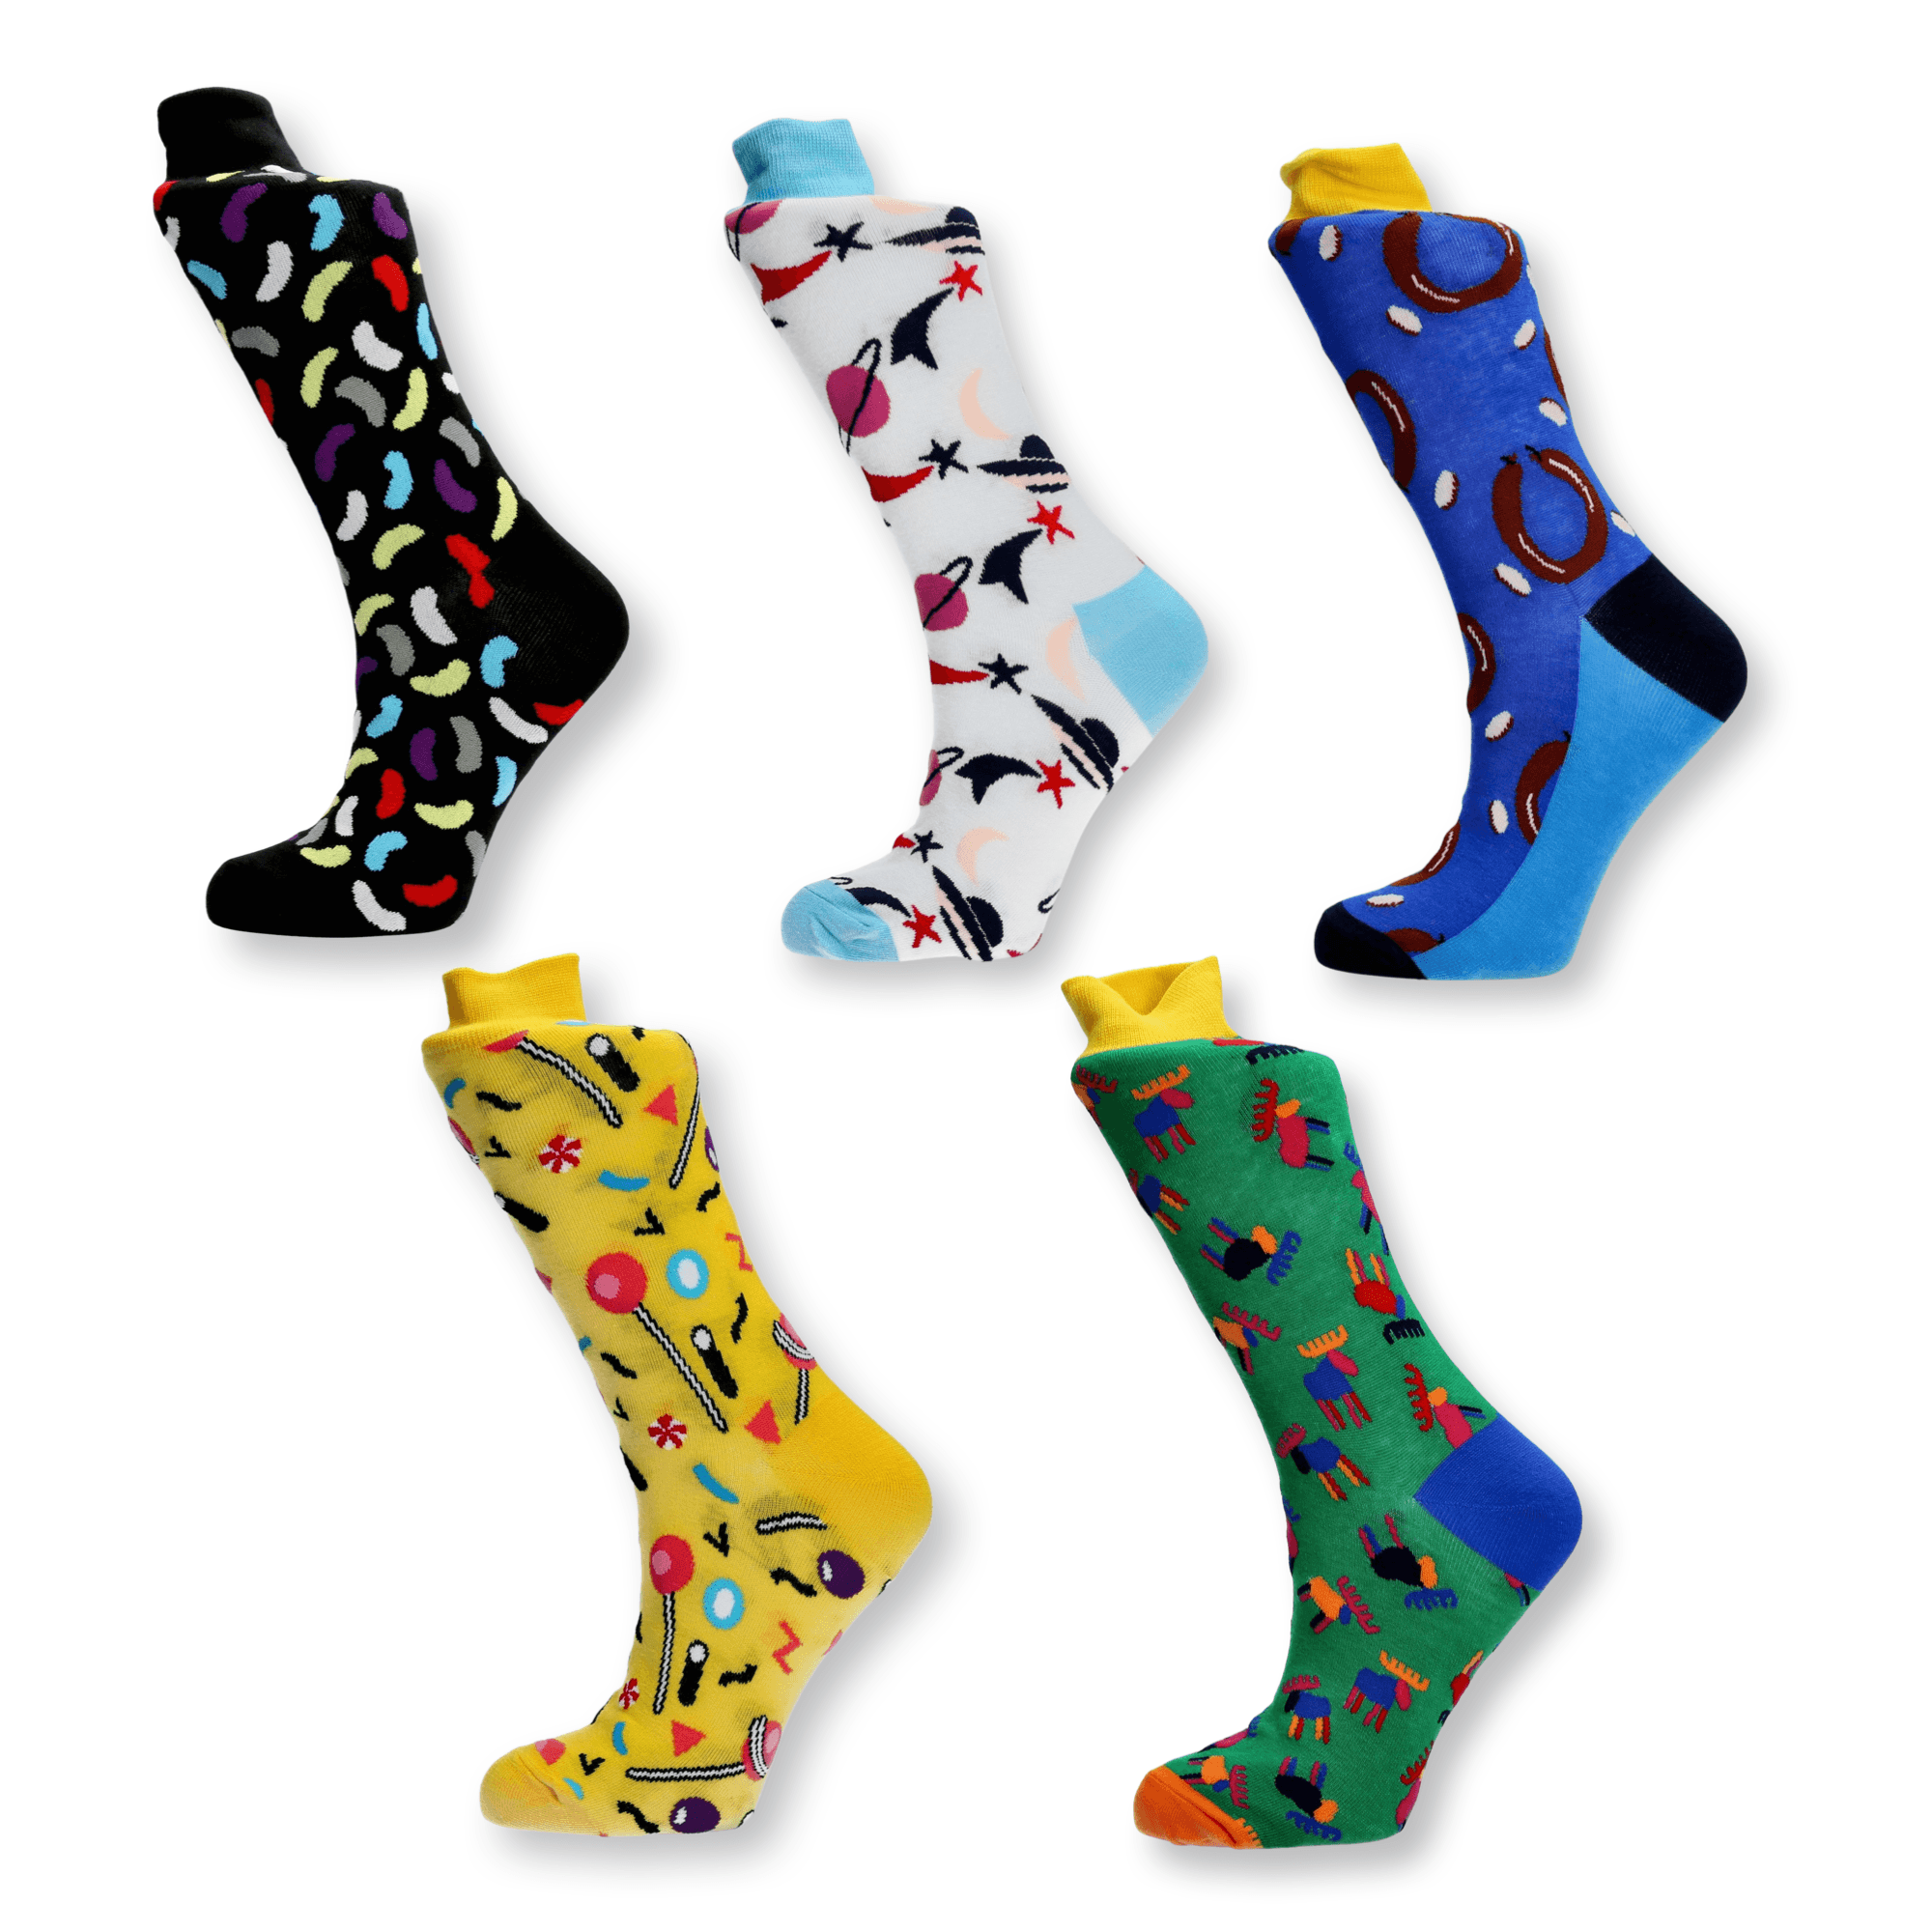 Pack of 5 pairs of socks - Bonbons